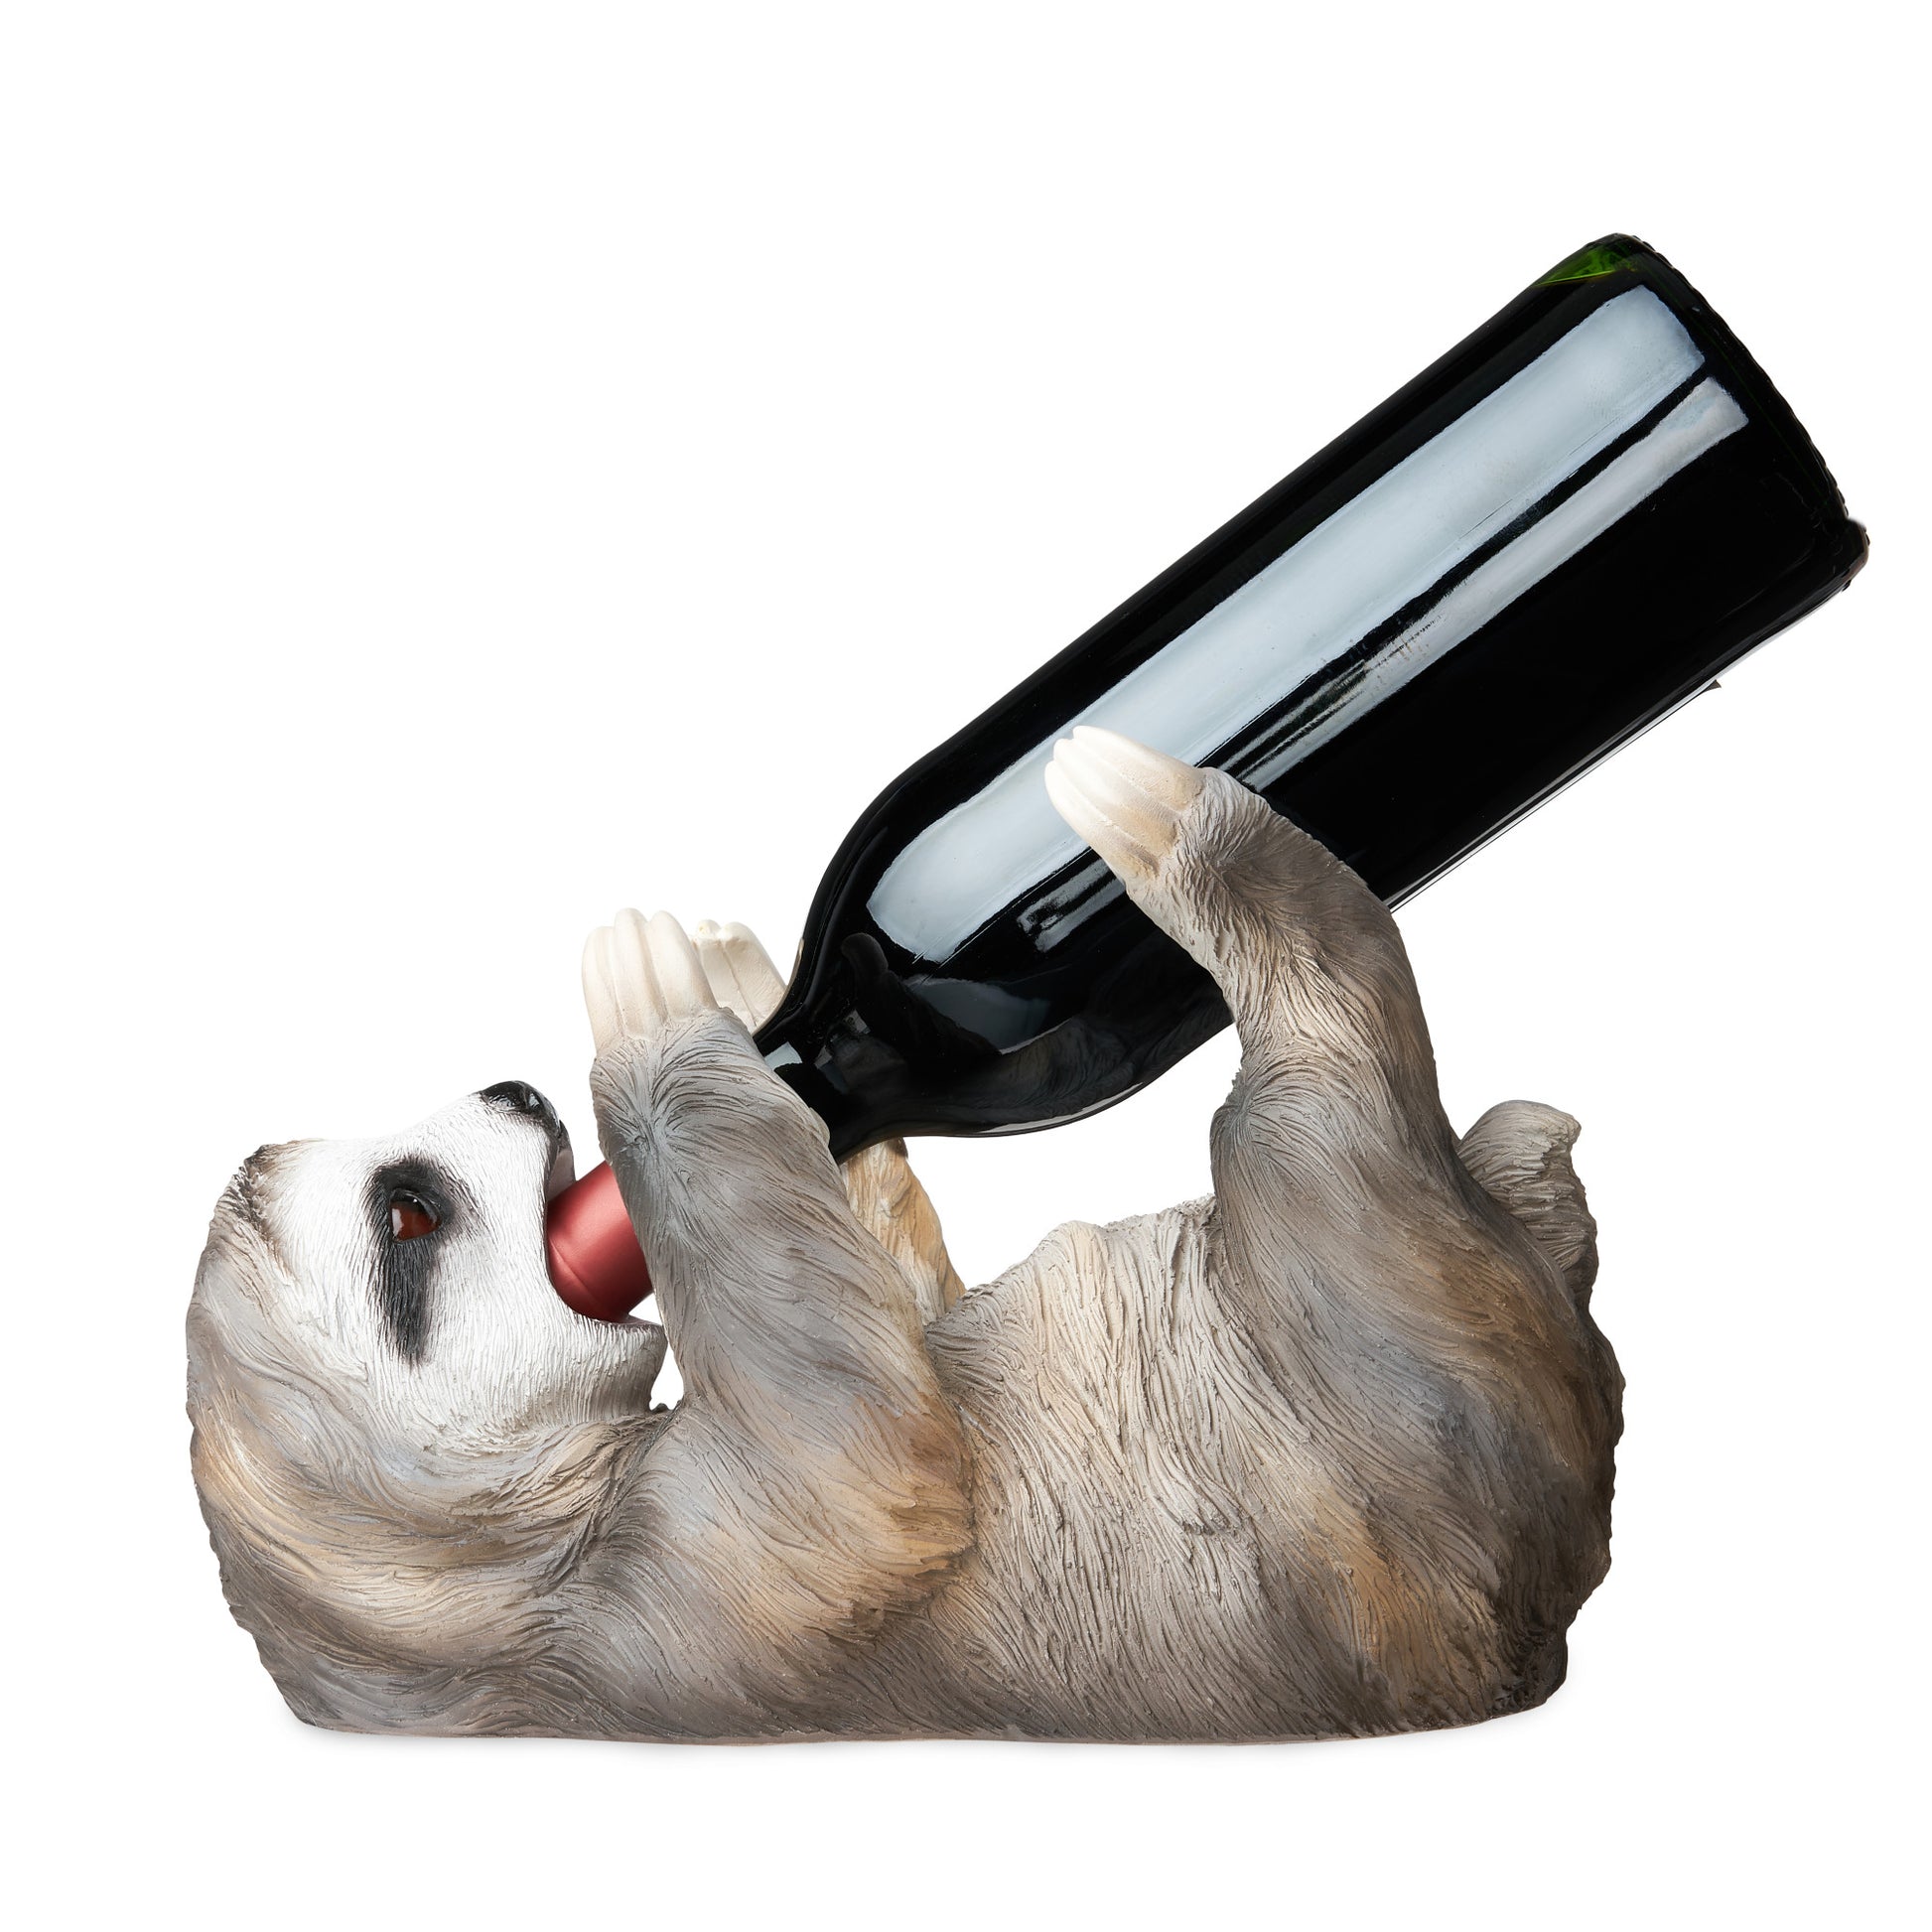 Sloth Wine Bottle Holder by True-0